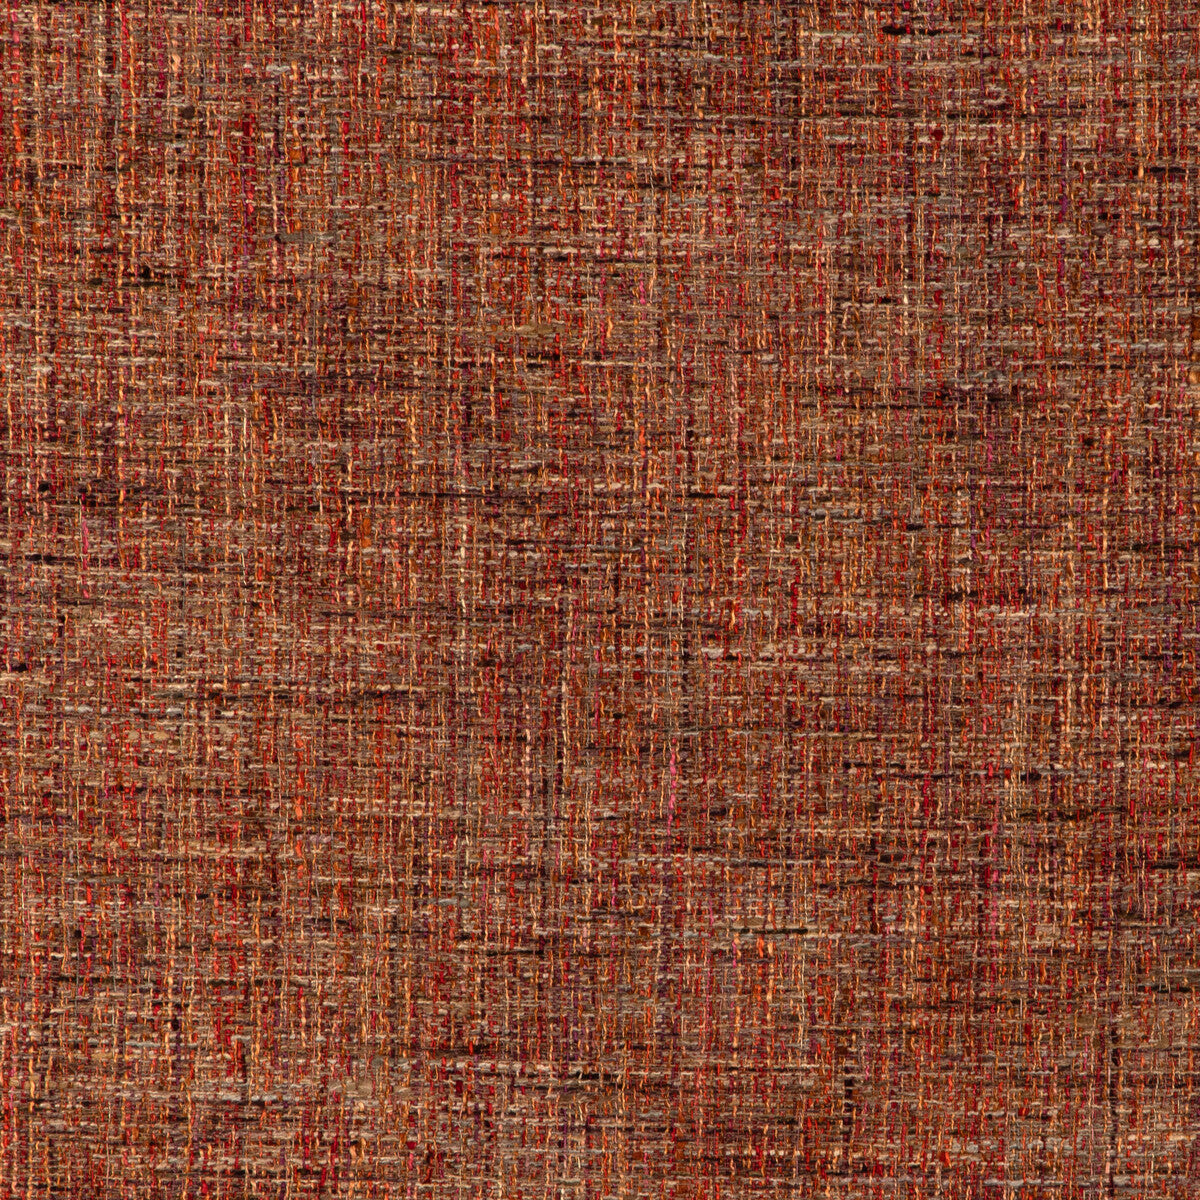 Kravet Smart fabric in 36660-24 color - pattern 36660.24.0 - by Kravet Smart in the Performance Kravetarmor collection